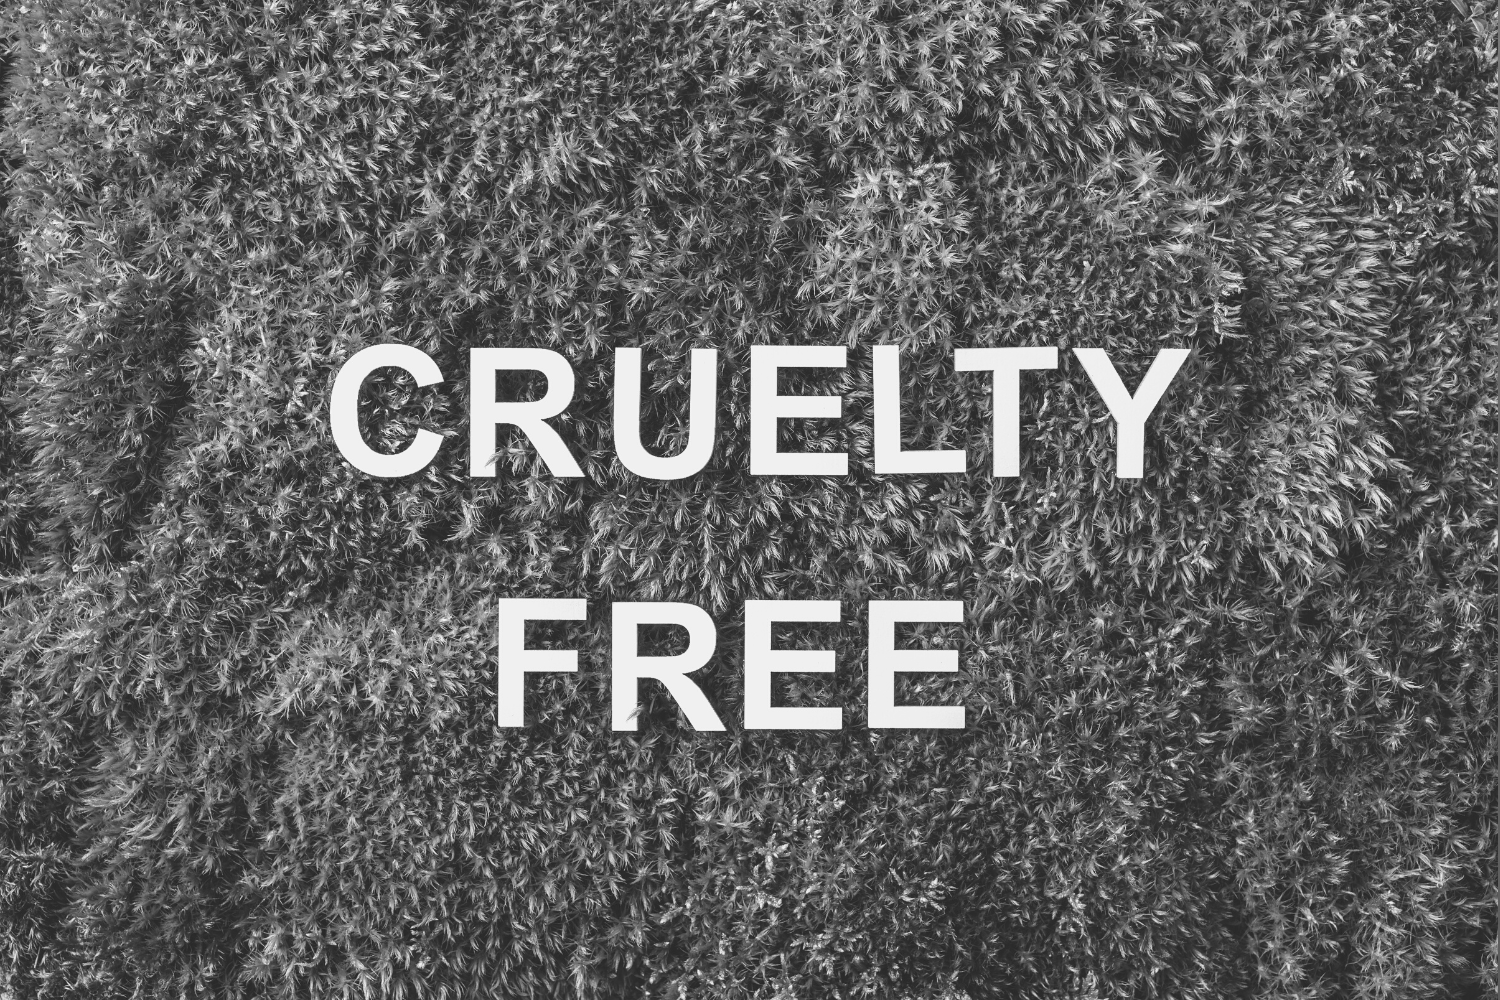 cruelty-free skincare brands, cruelty-free cosmetics companies, cruelty-free brands, vegan skincare, cruelty-free skin products, vegan cosmetics brand, Tierra by Maria